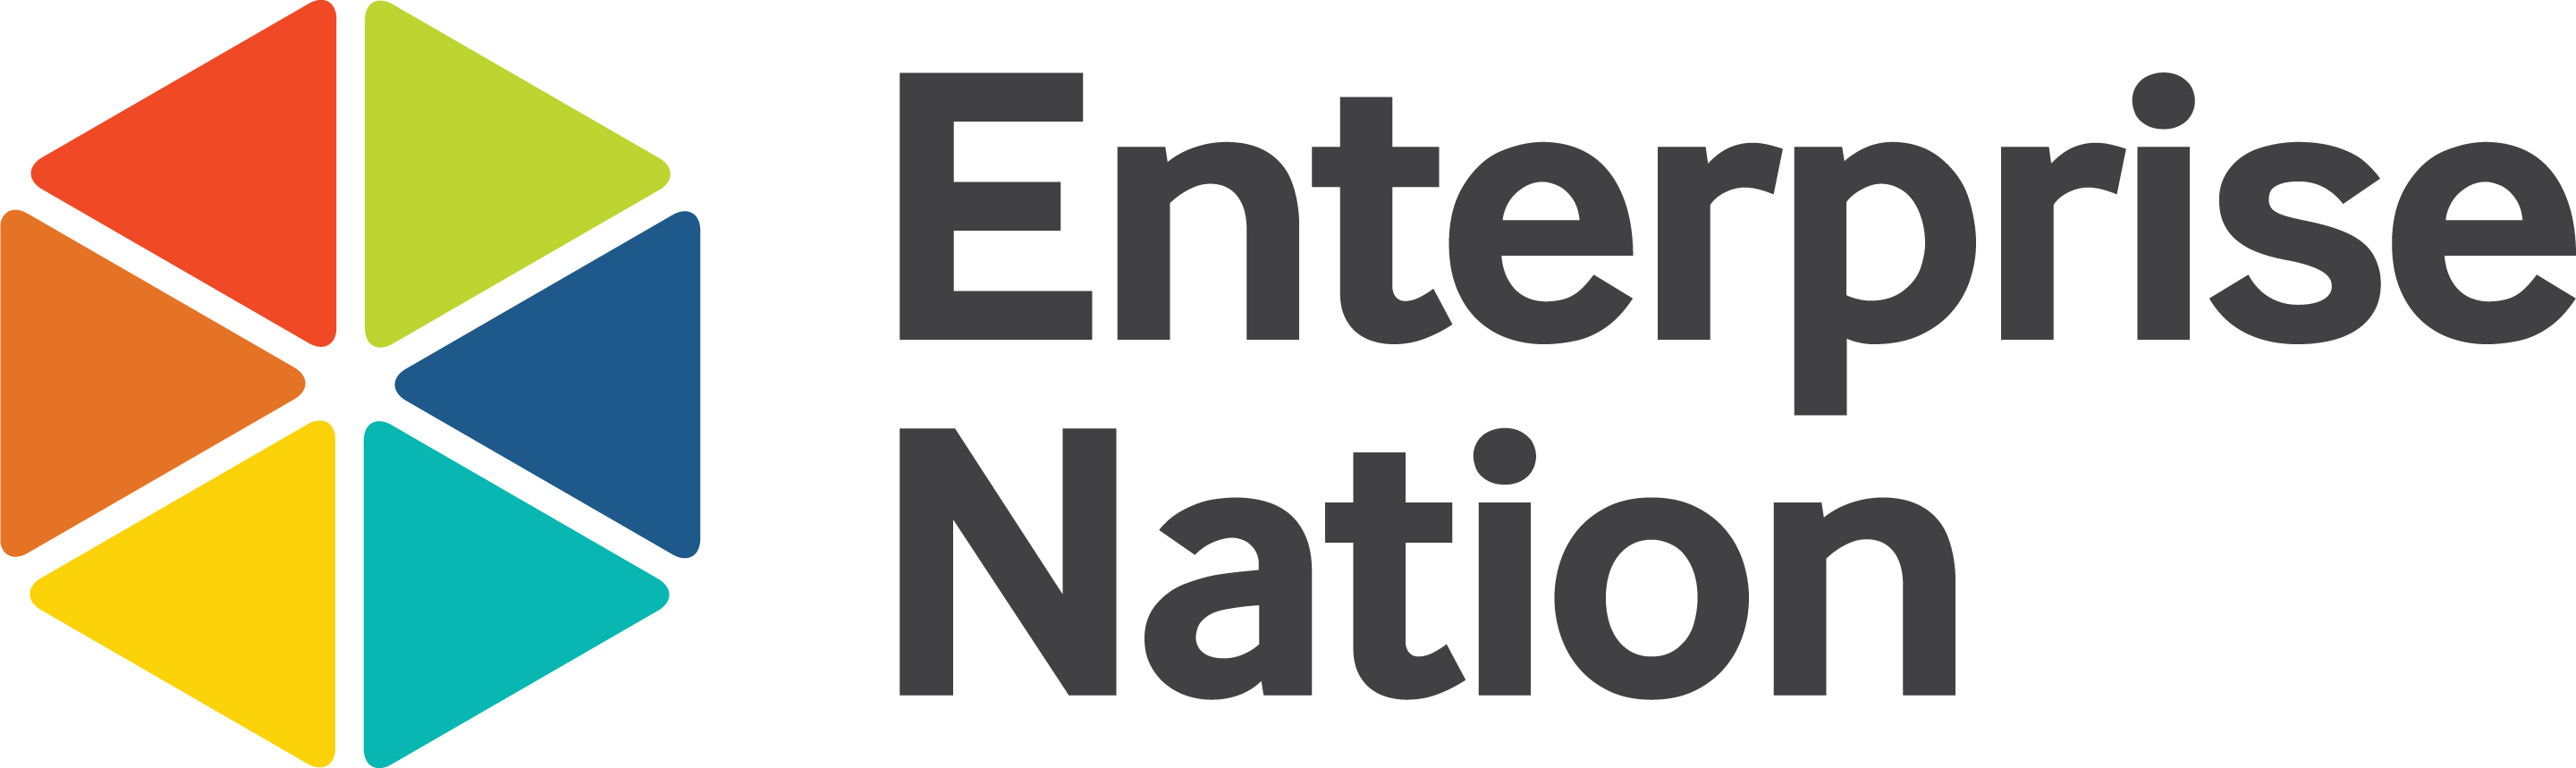 Enterprise nation